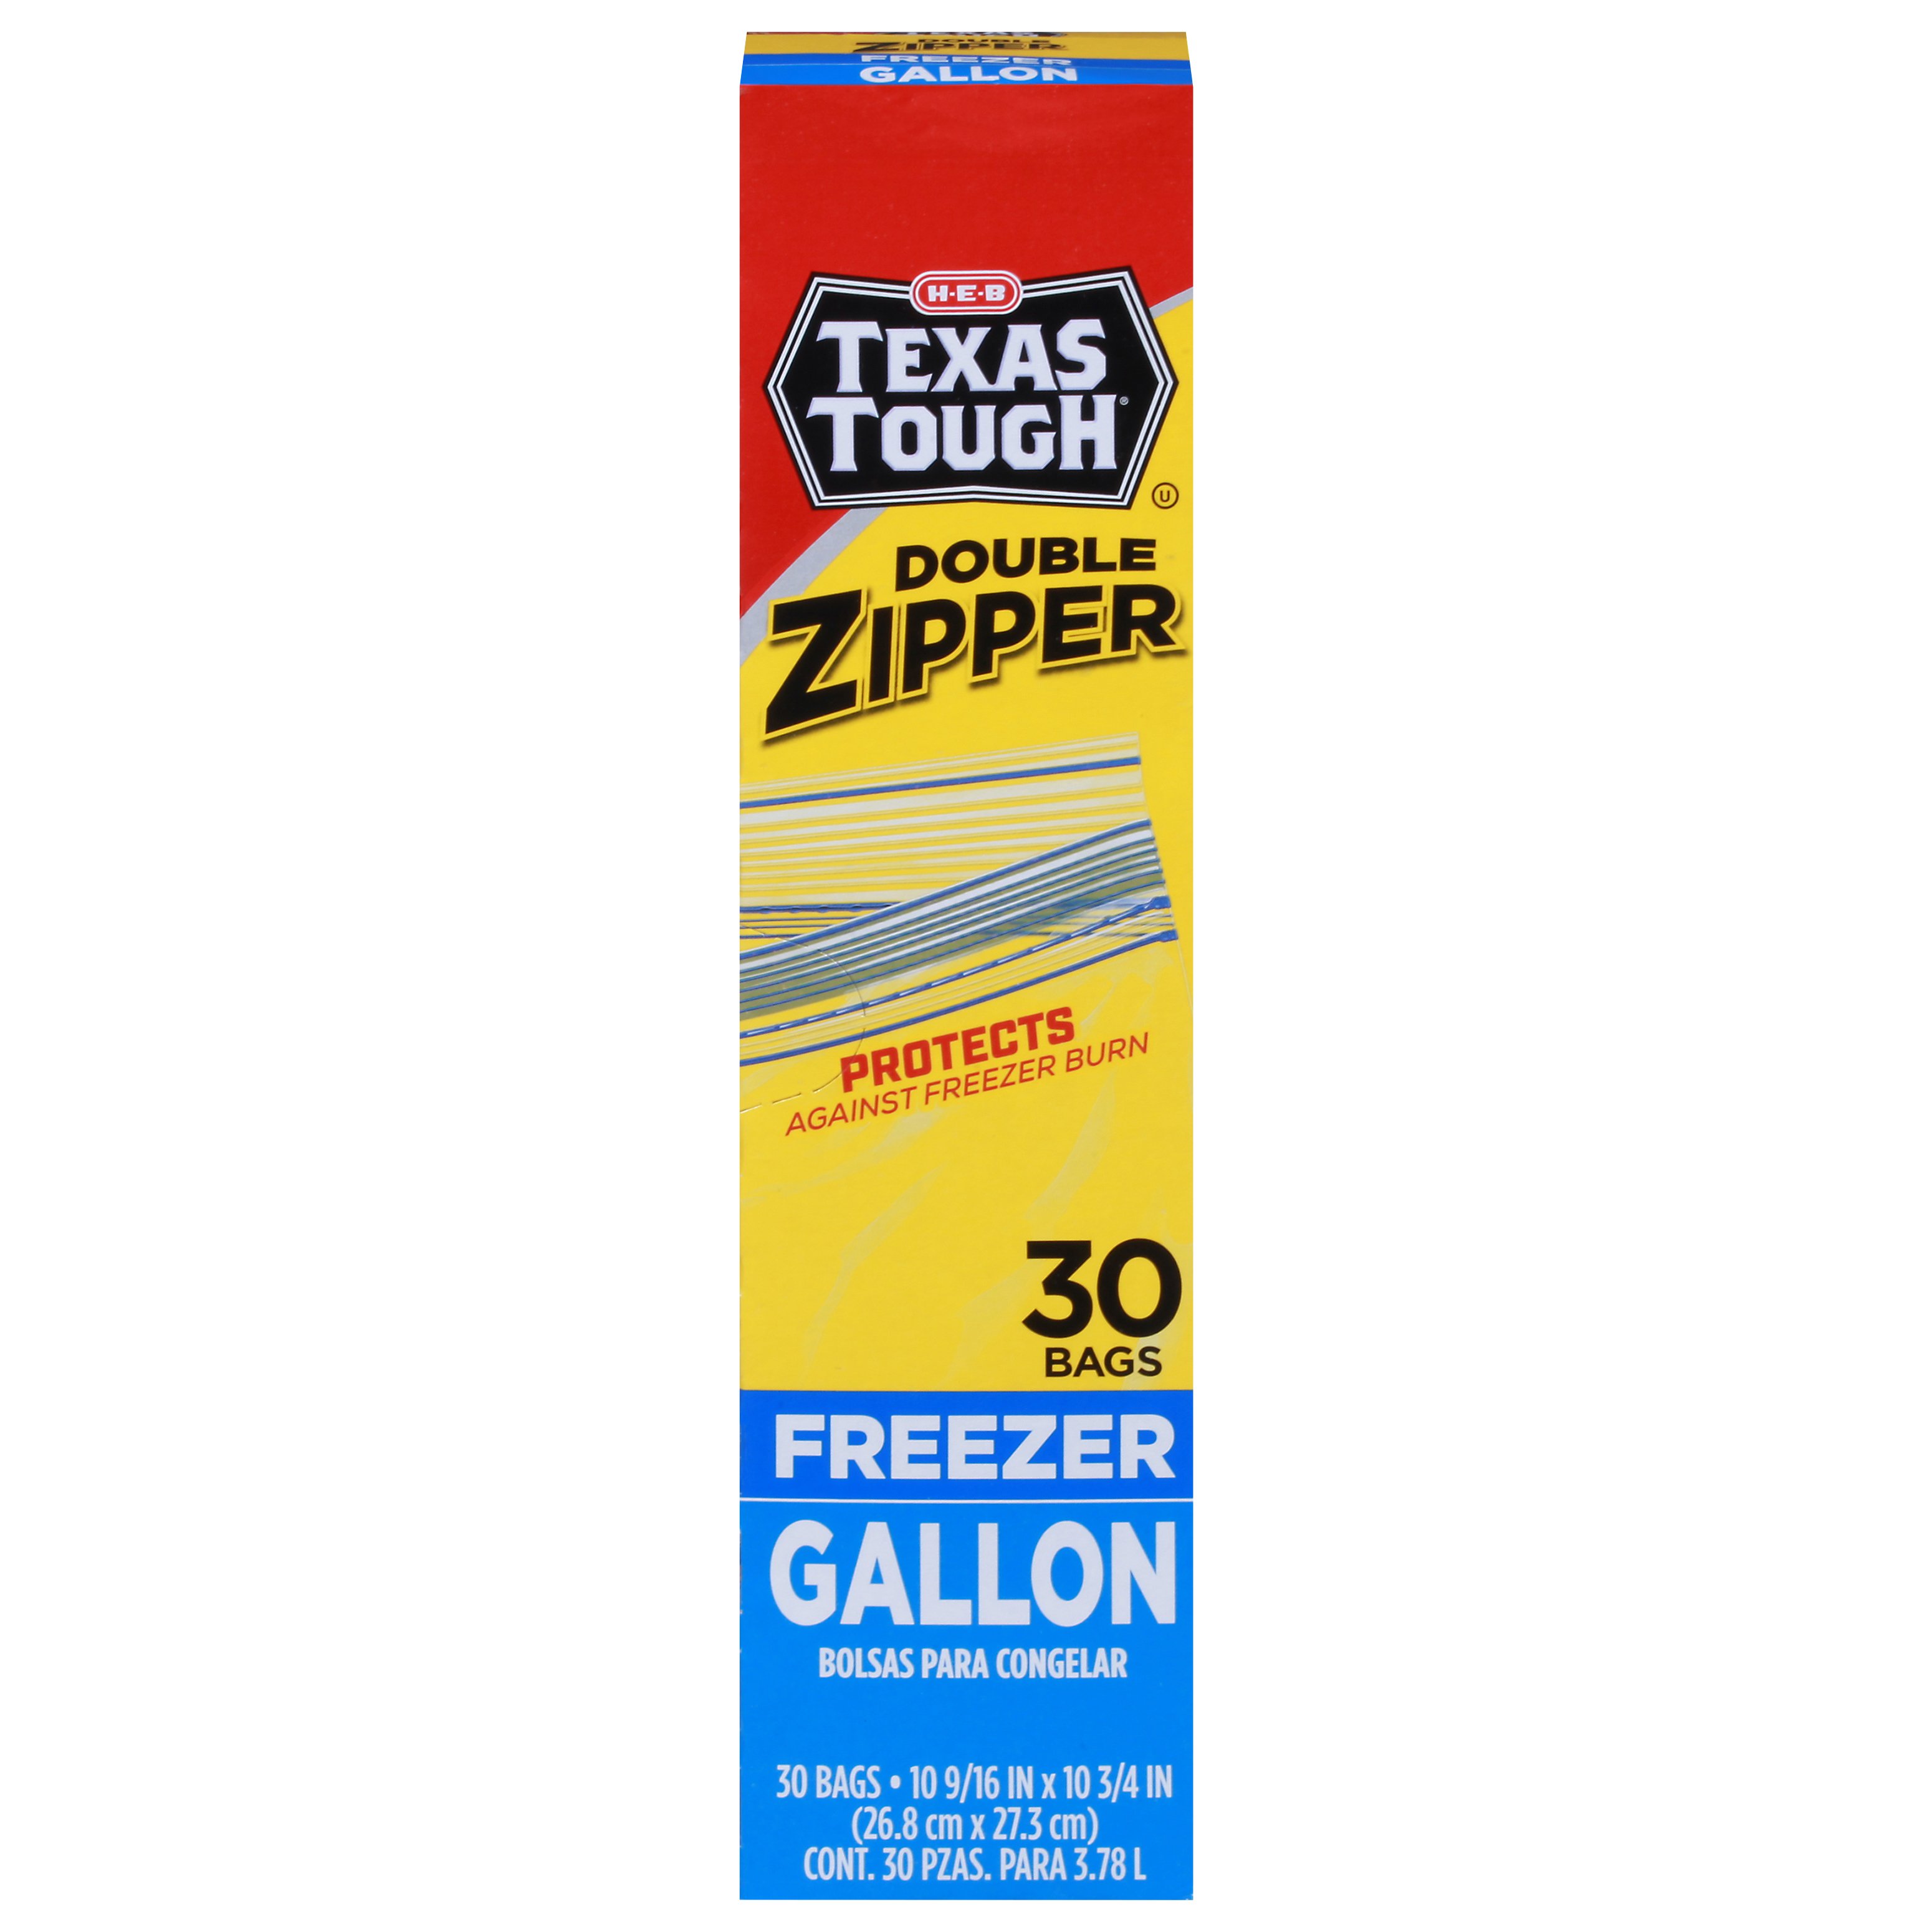 H-E-B Texas Tough Double Zipper Gallon Freezer Bags - Shop Storage